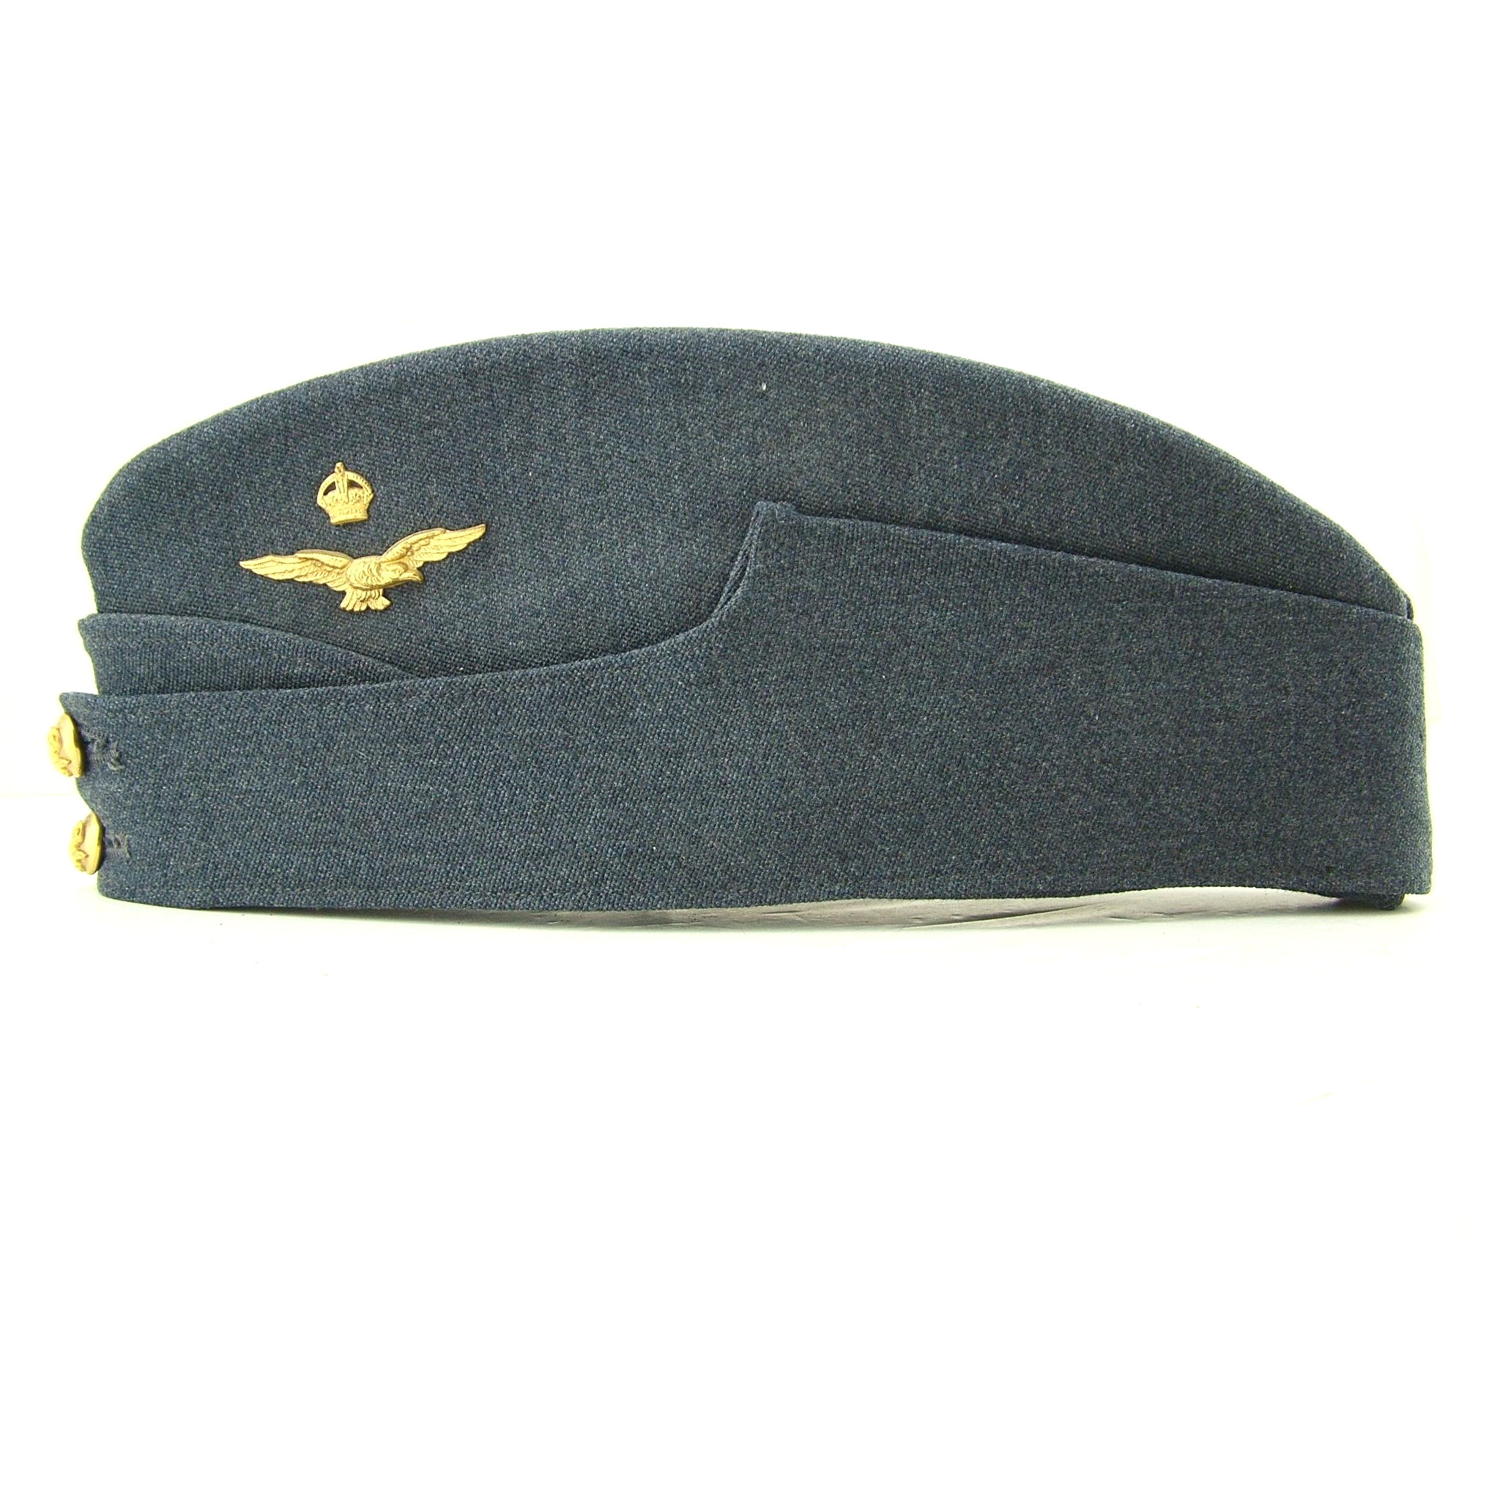 RAF officer rank field service cap